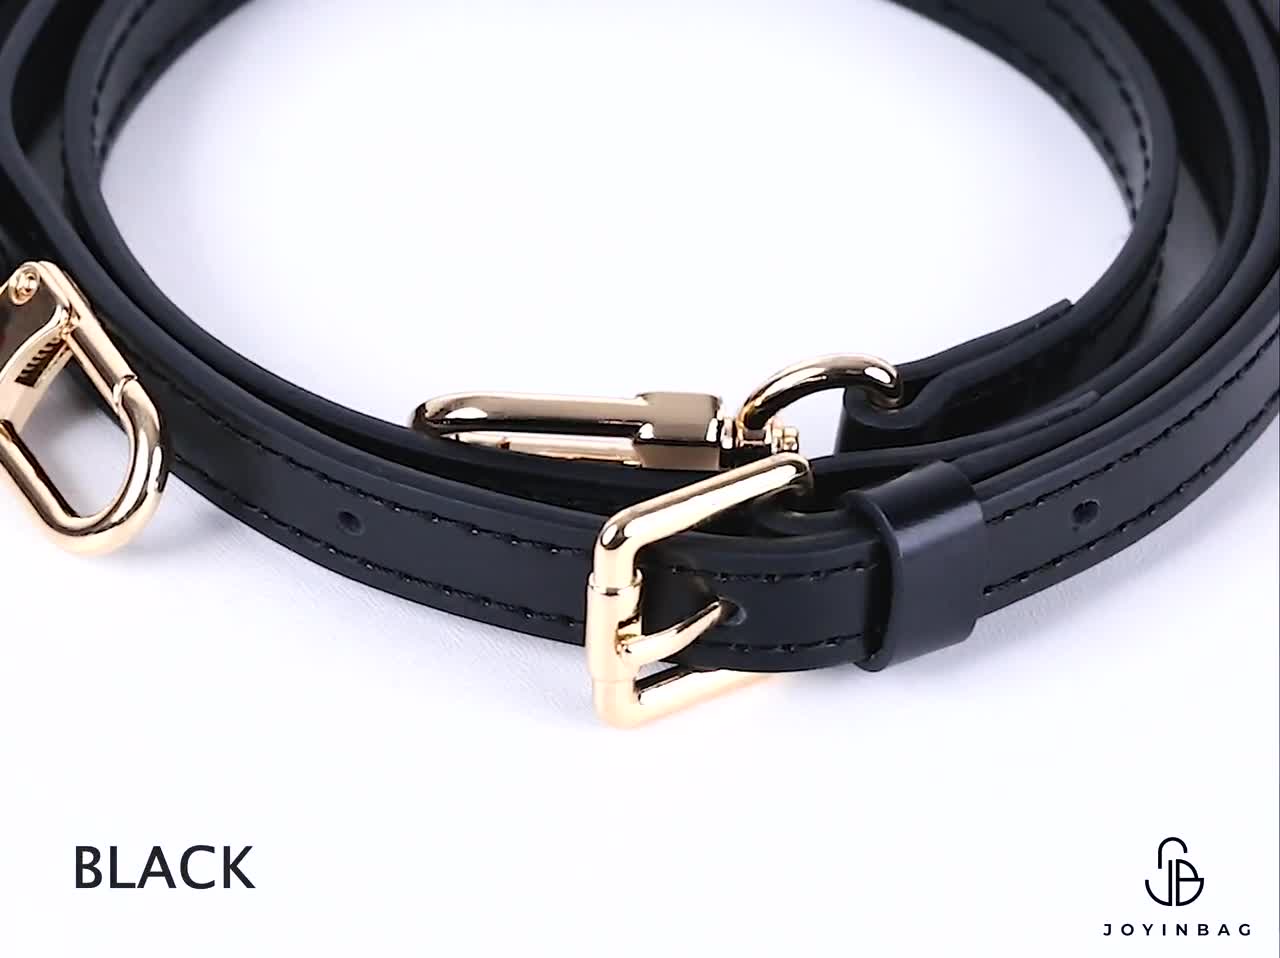 Louis Vuitton PAPILLON mini bag belt conversion @purserehab - added 2  vachetta leather loops - custom made adjustable strap - matched…